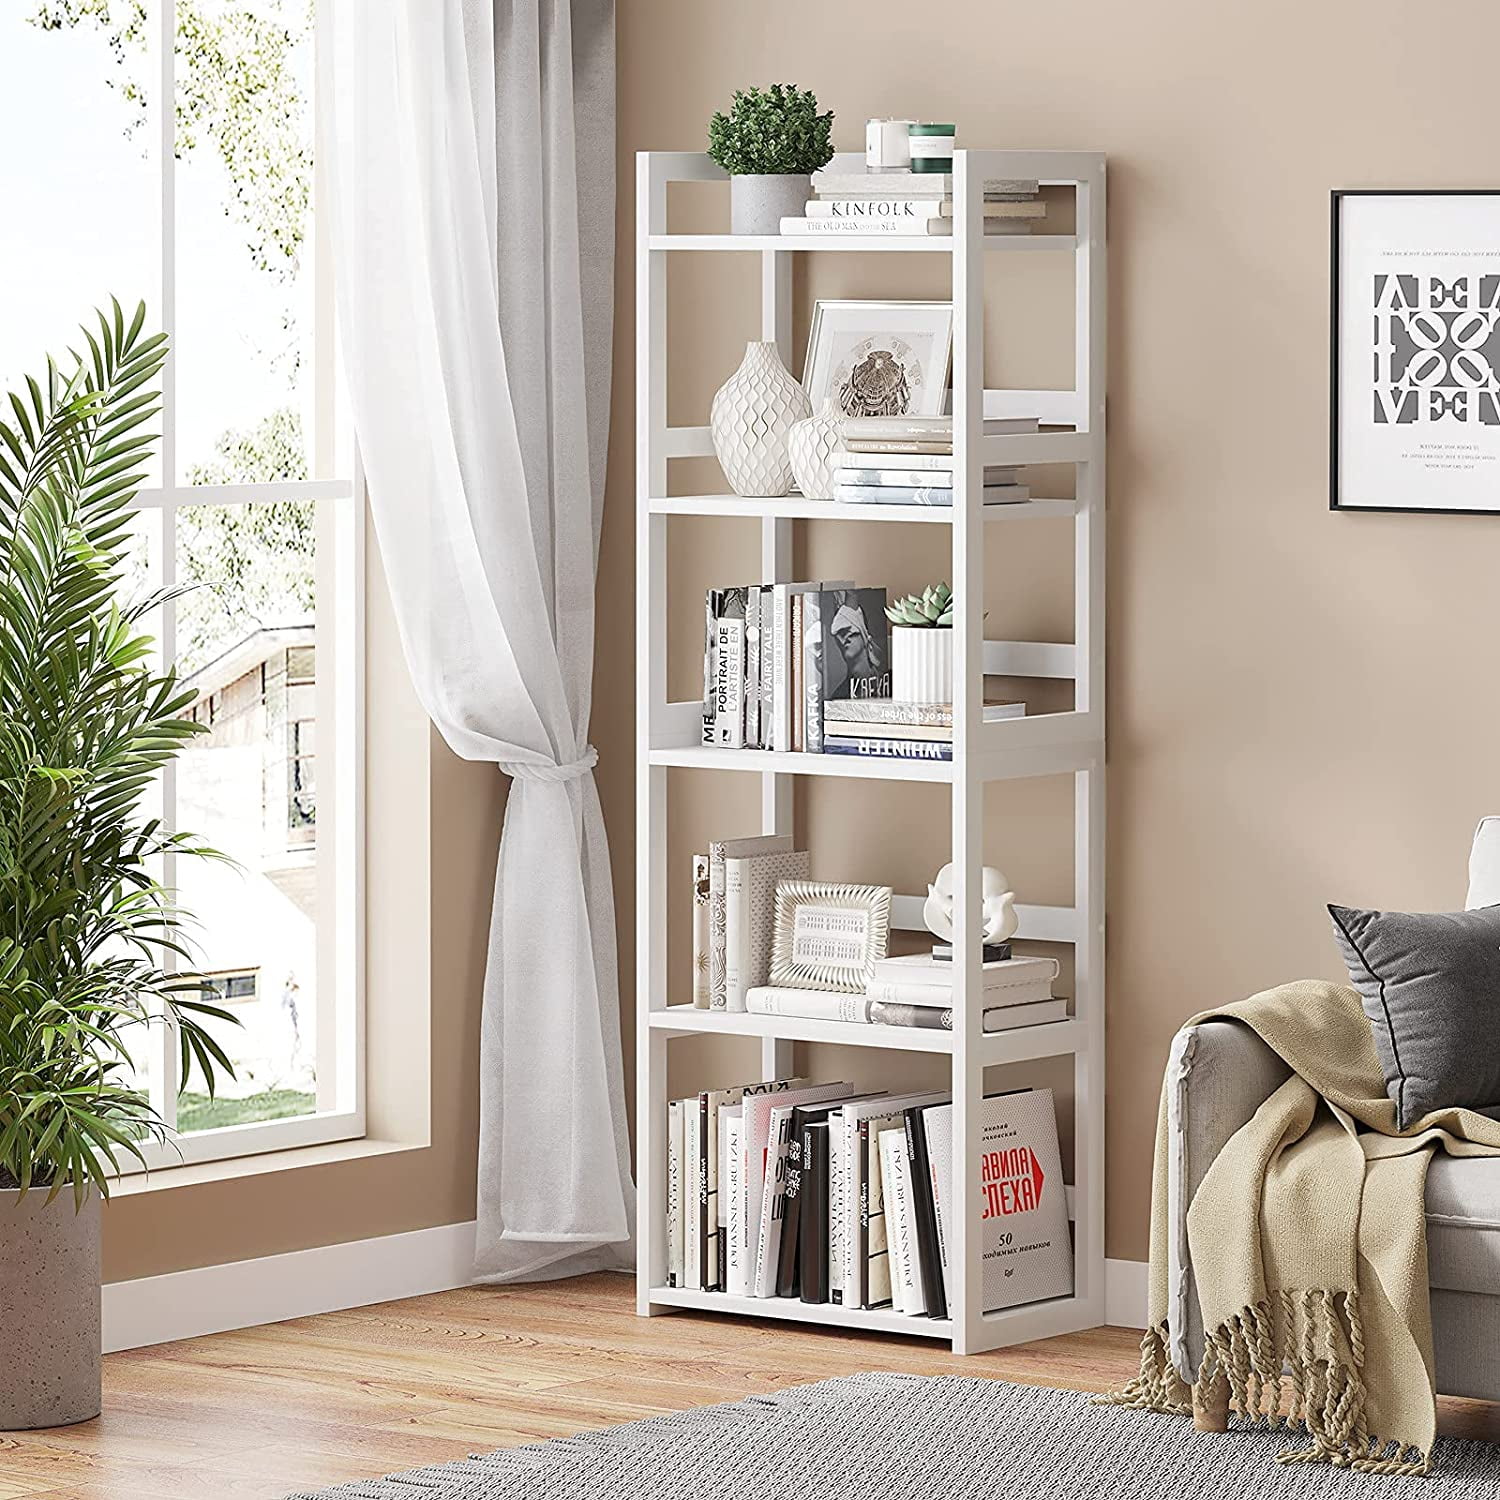 Details about   4 Shelf Bookcase Storage Bookshelf Wood Furniture Book Shelving Home Office 